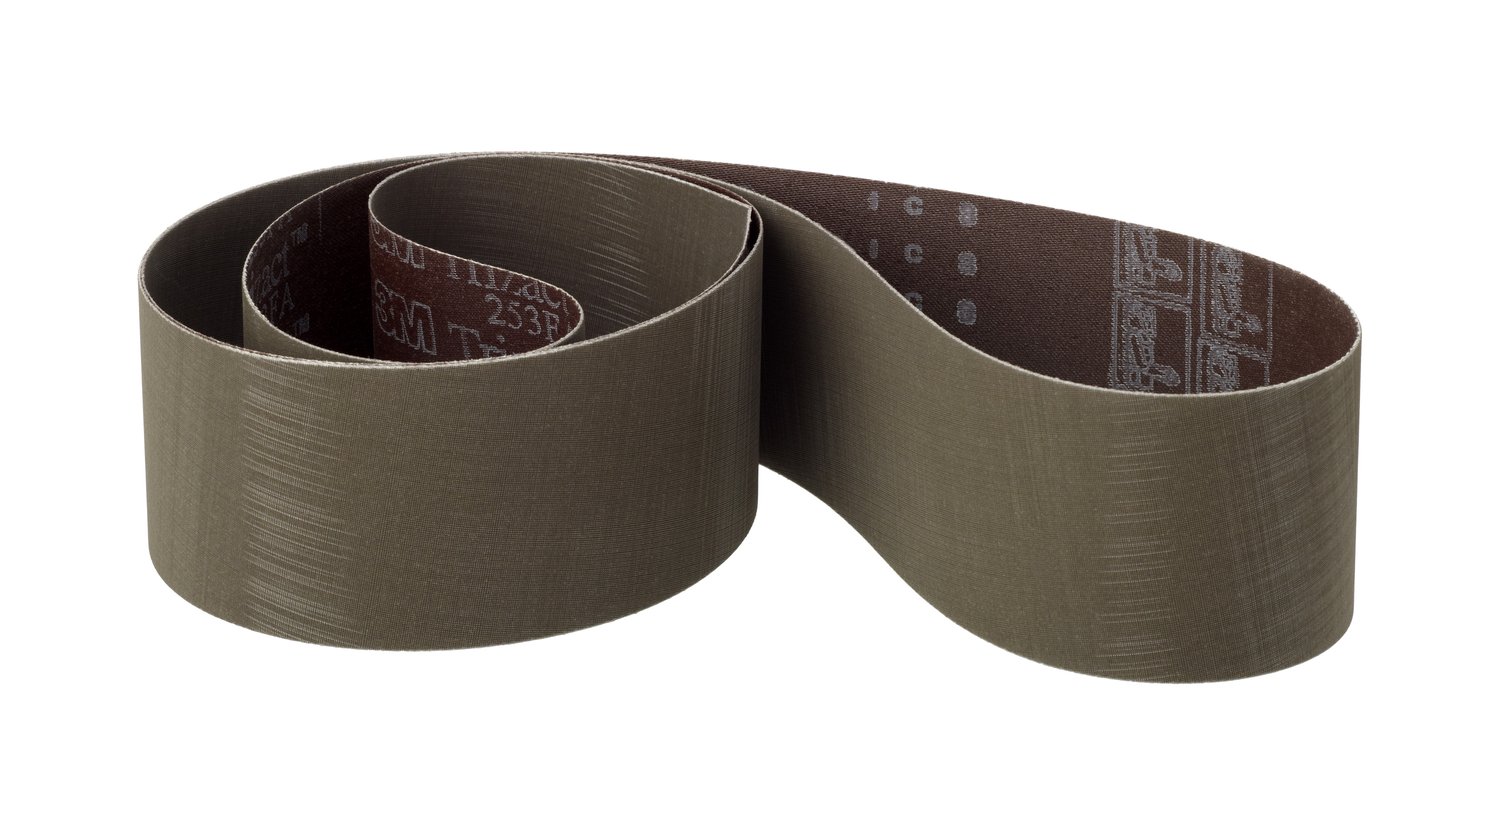 7010514738 - 3M Trizact Cloth Belt 253FA, A30 XF-weight, 13 in x 75 in, Film-lok,
Full-flex